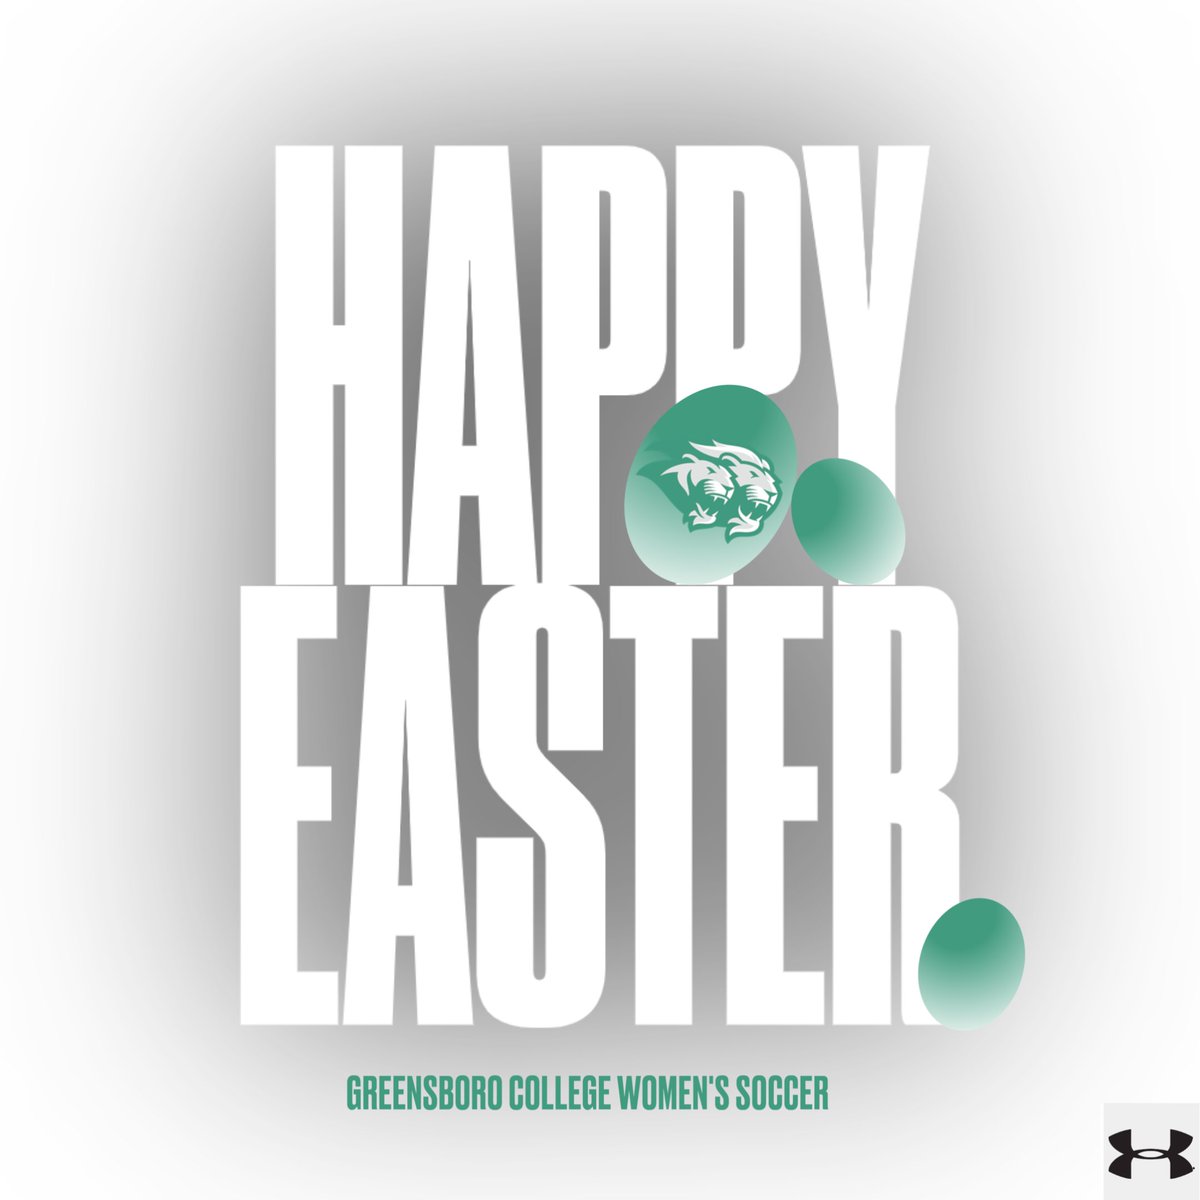 Happy Easter from Greensboro College Women's Soccer! #weareonepride